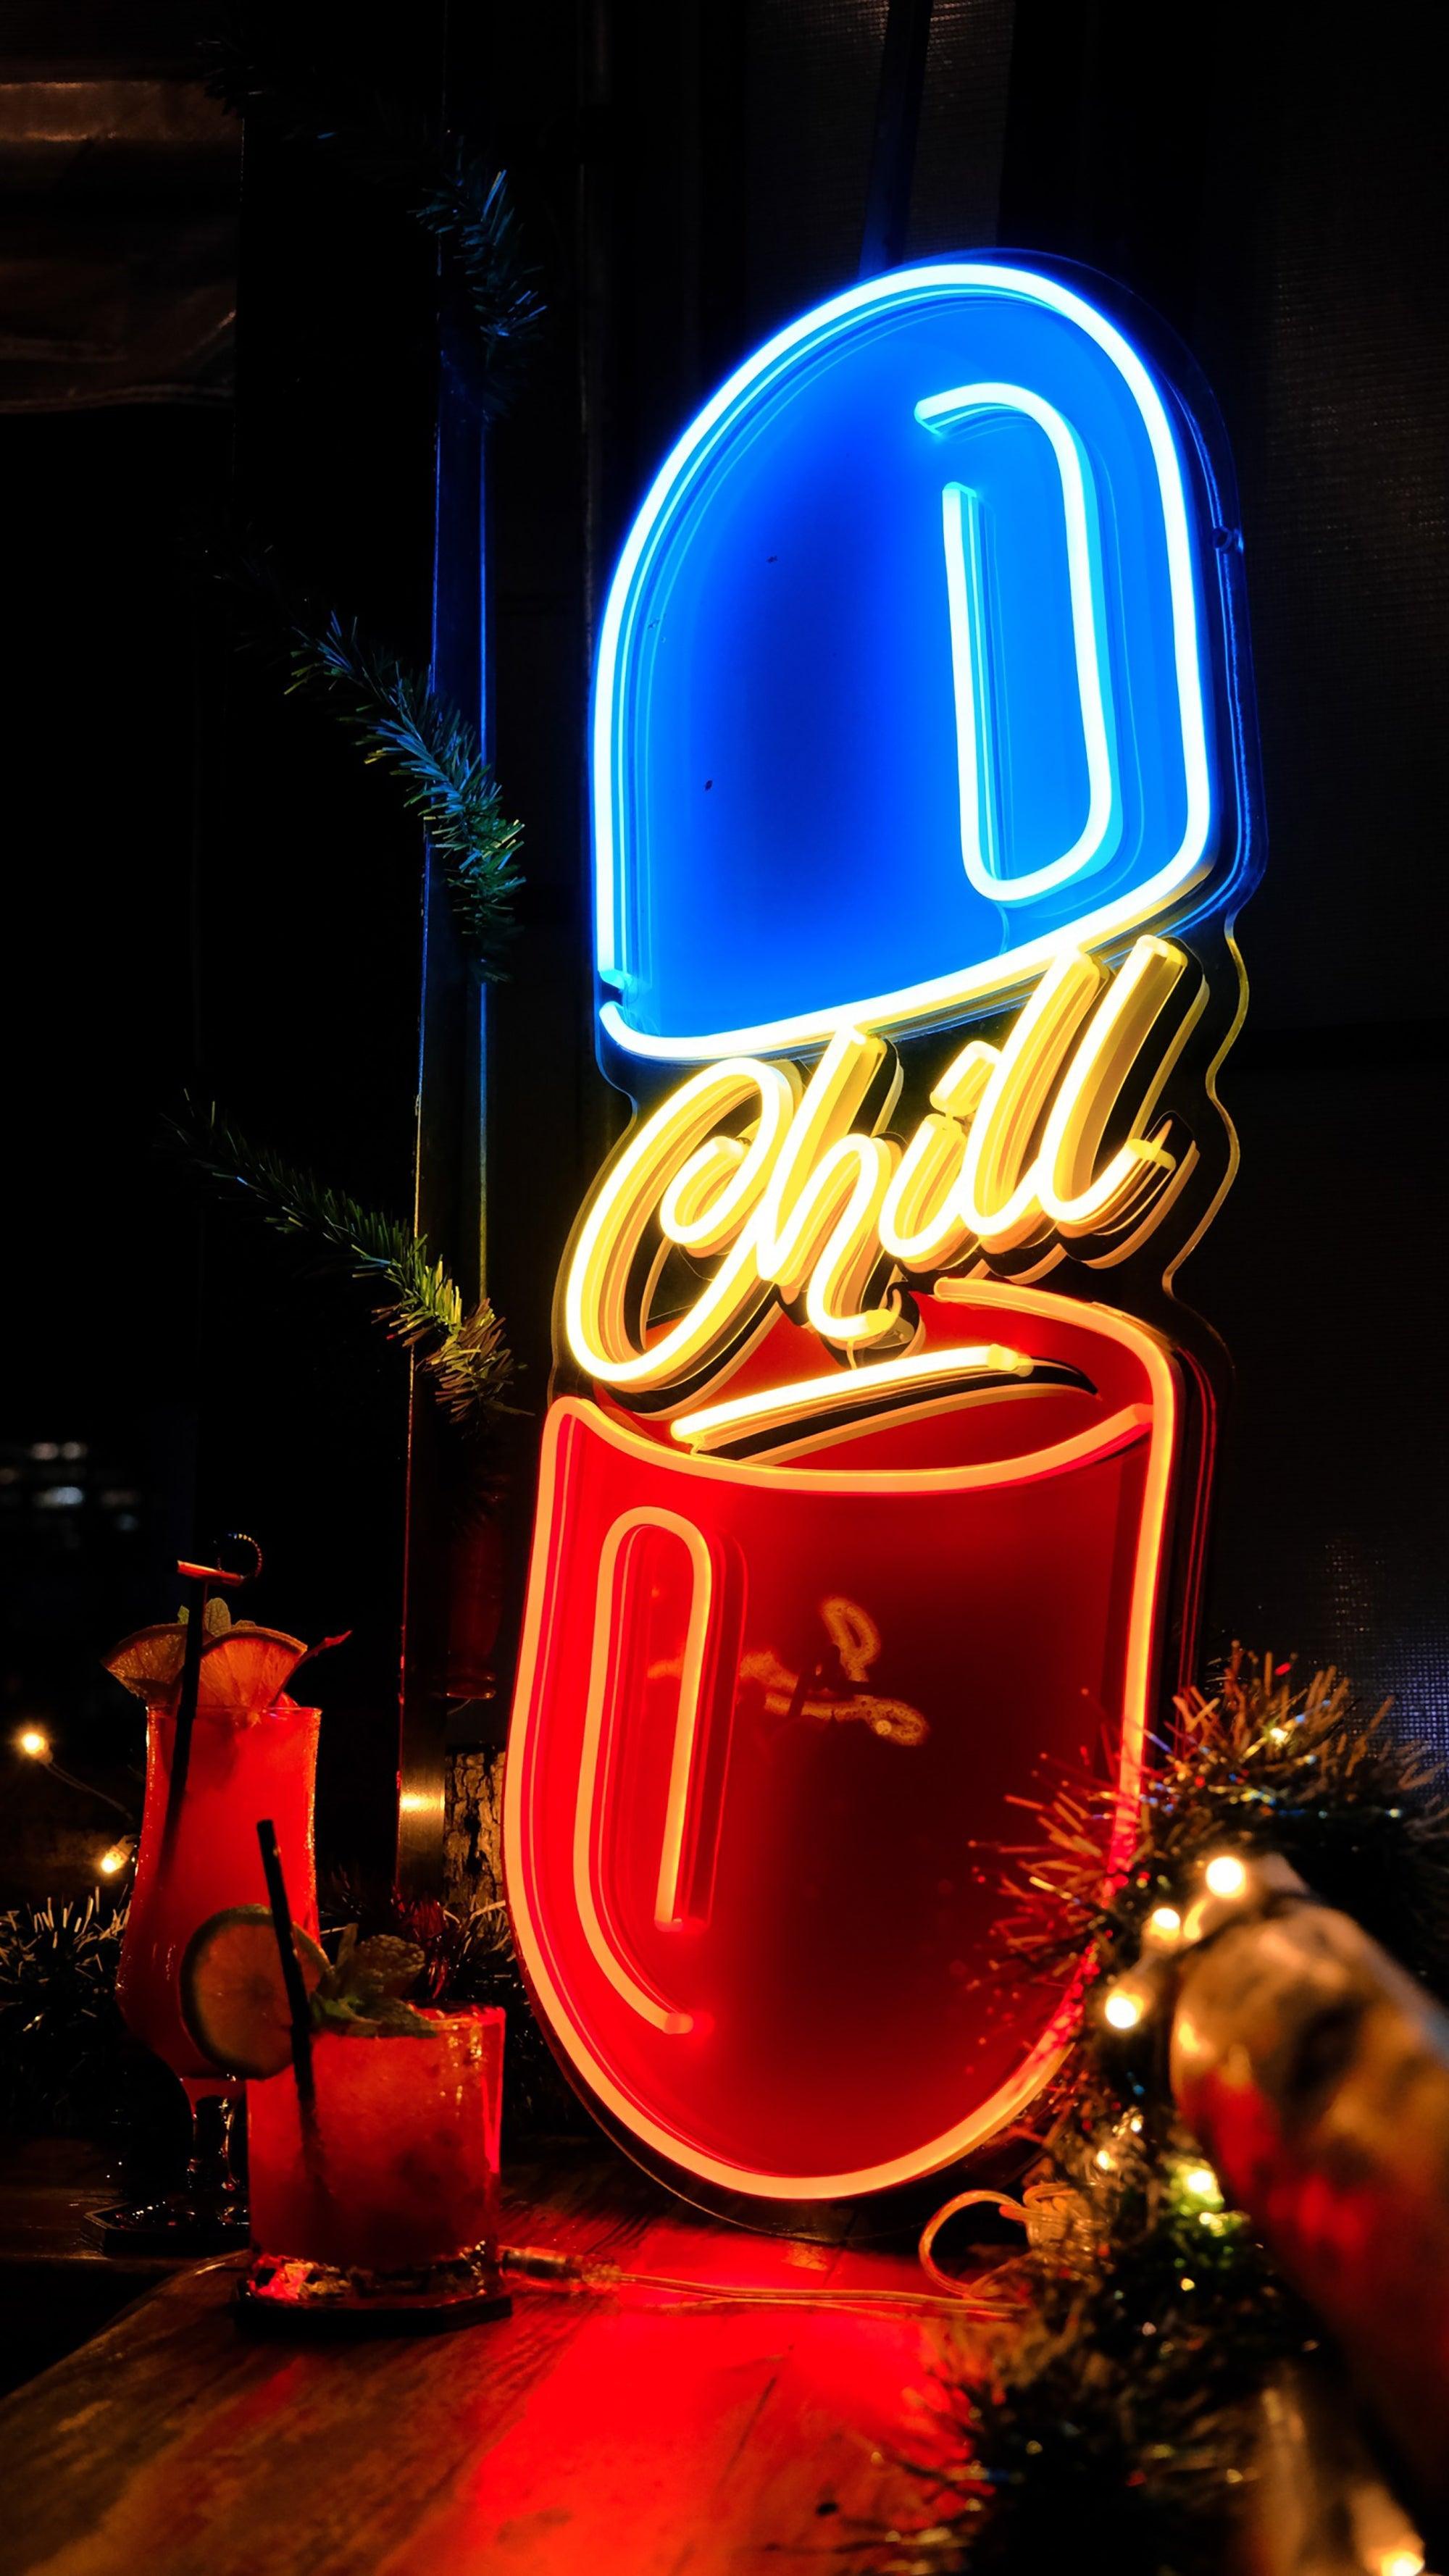 The Chill Pill Led Neon Acrylic Artwork Led Neon Sign Light - Neonbir